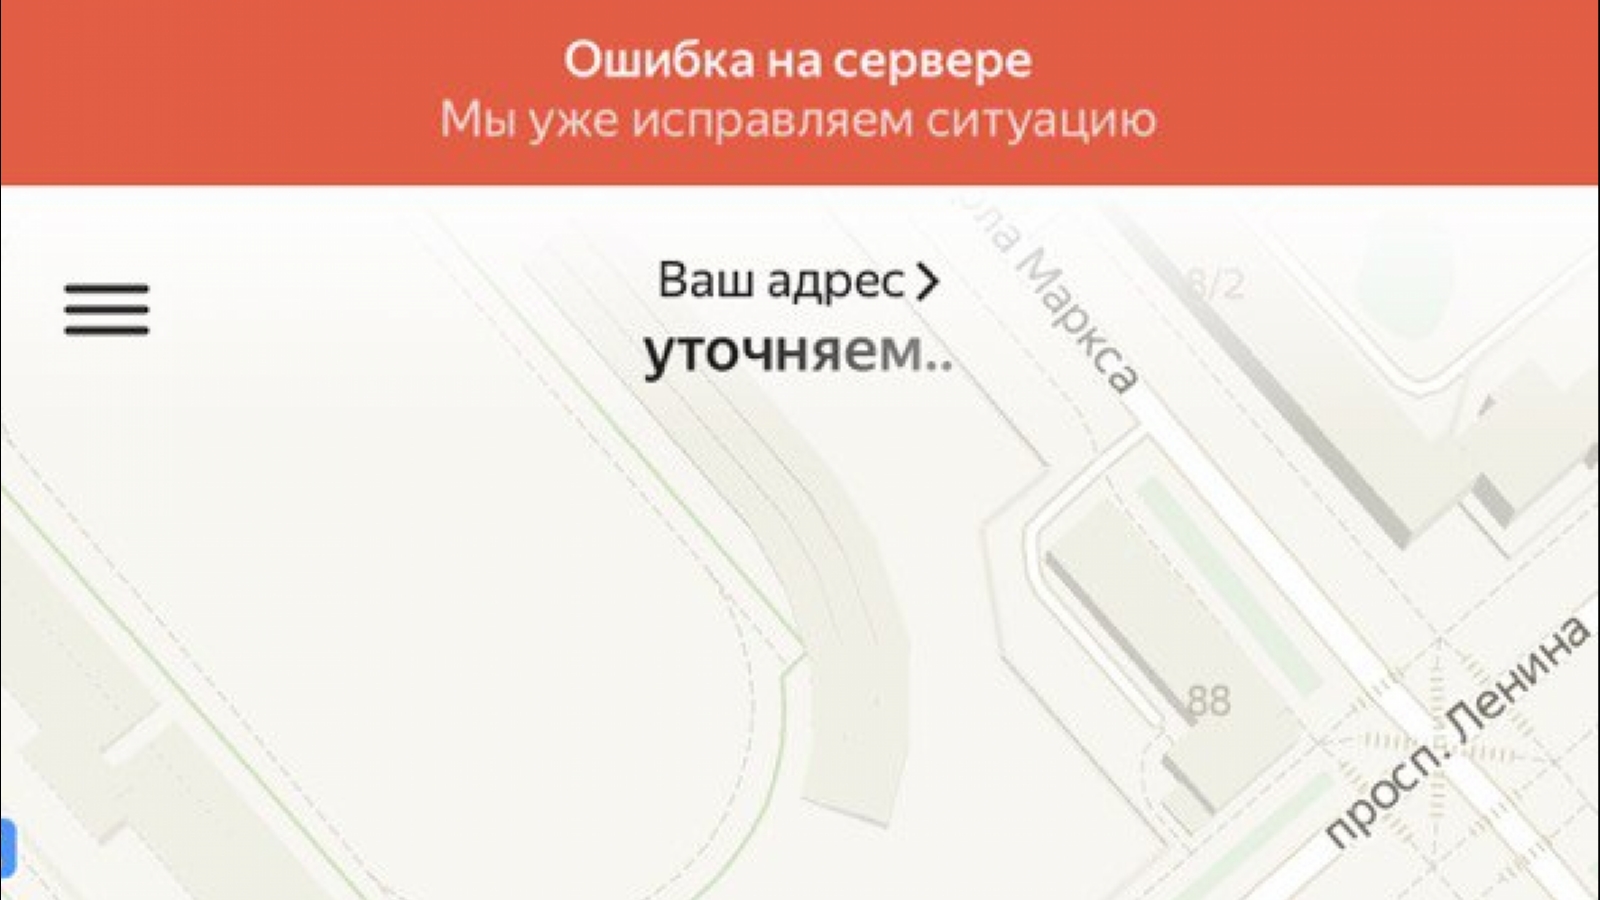 У Яндекс Такси в Мурманске сбой